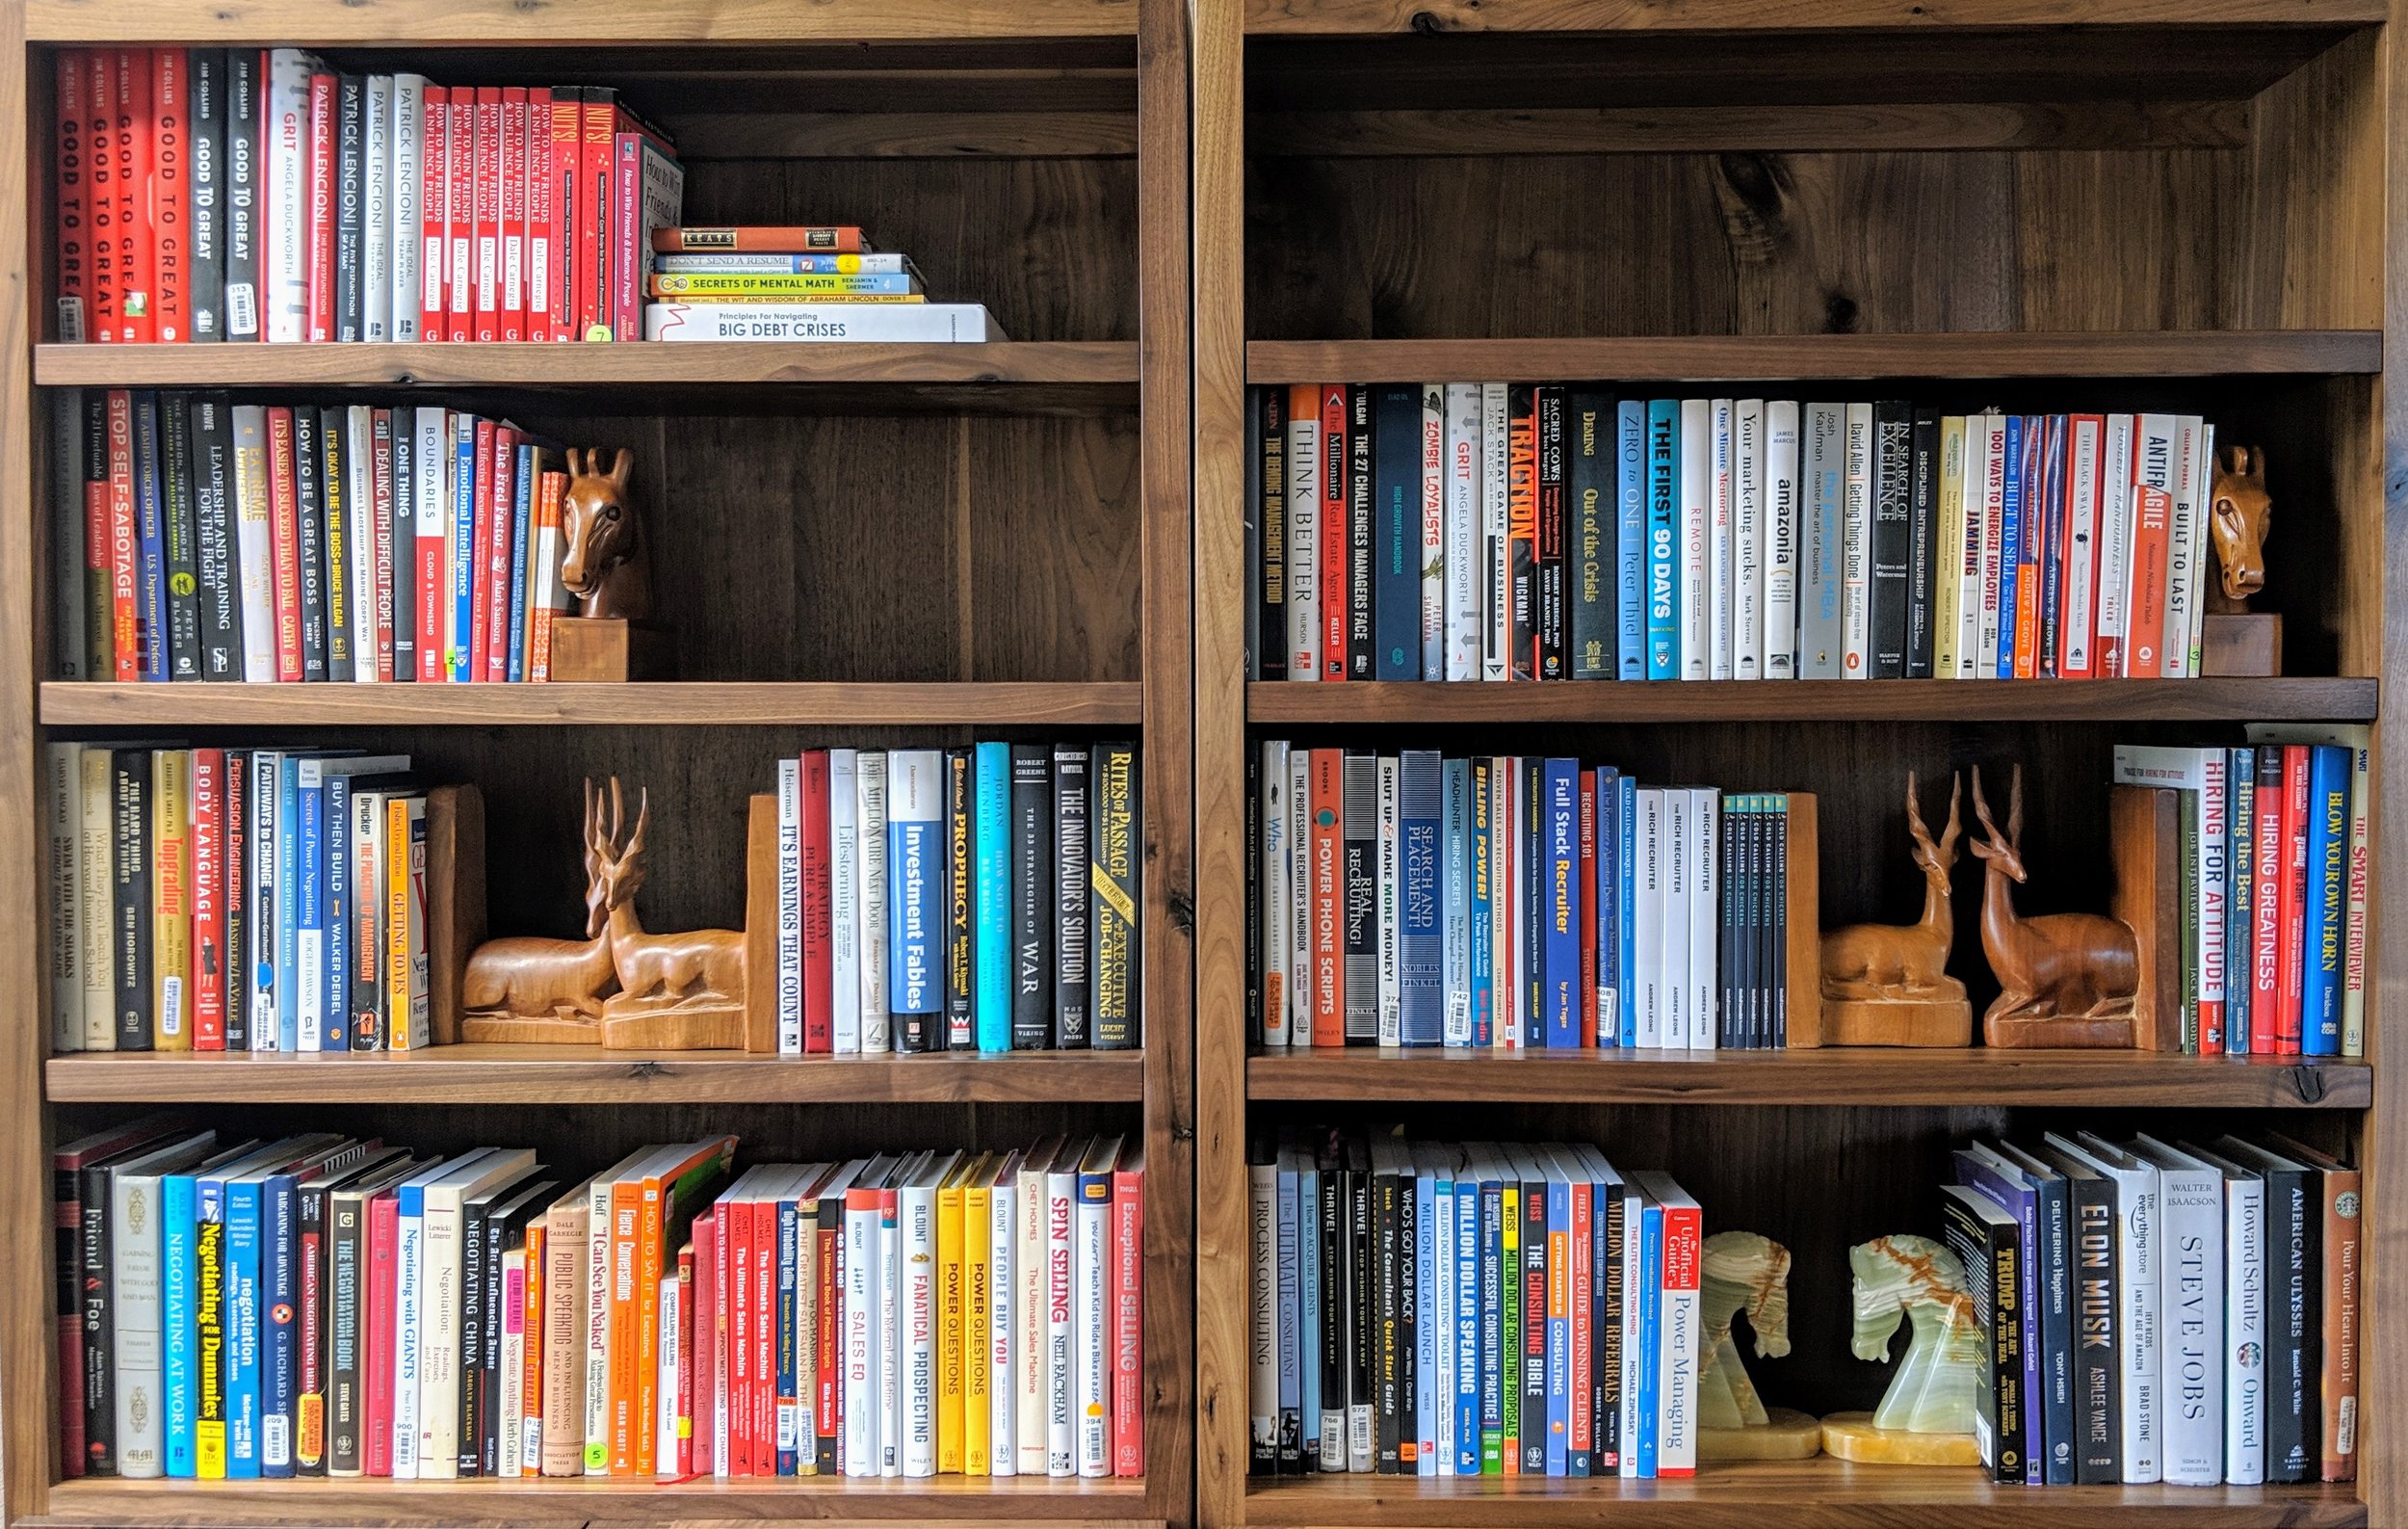  Our actual bookshelf. 